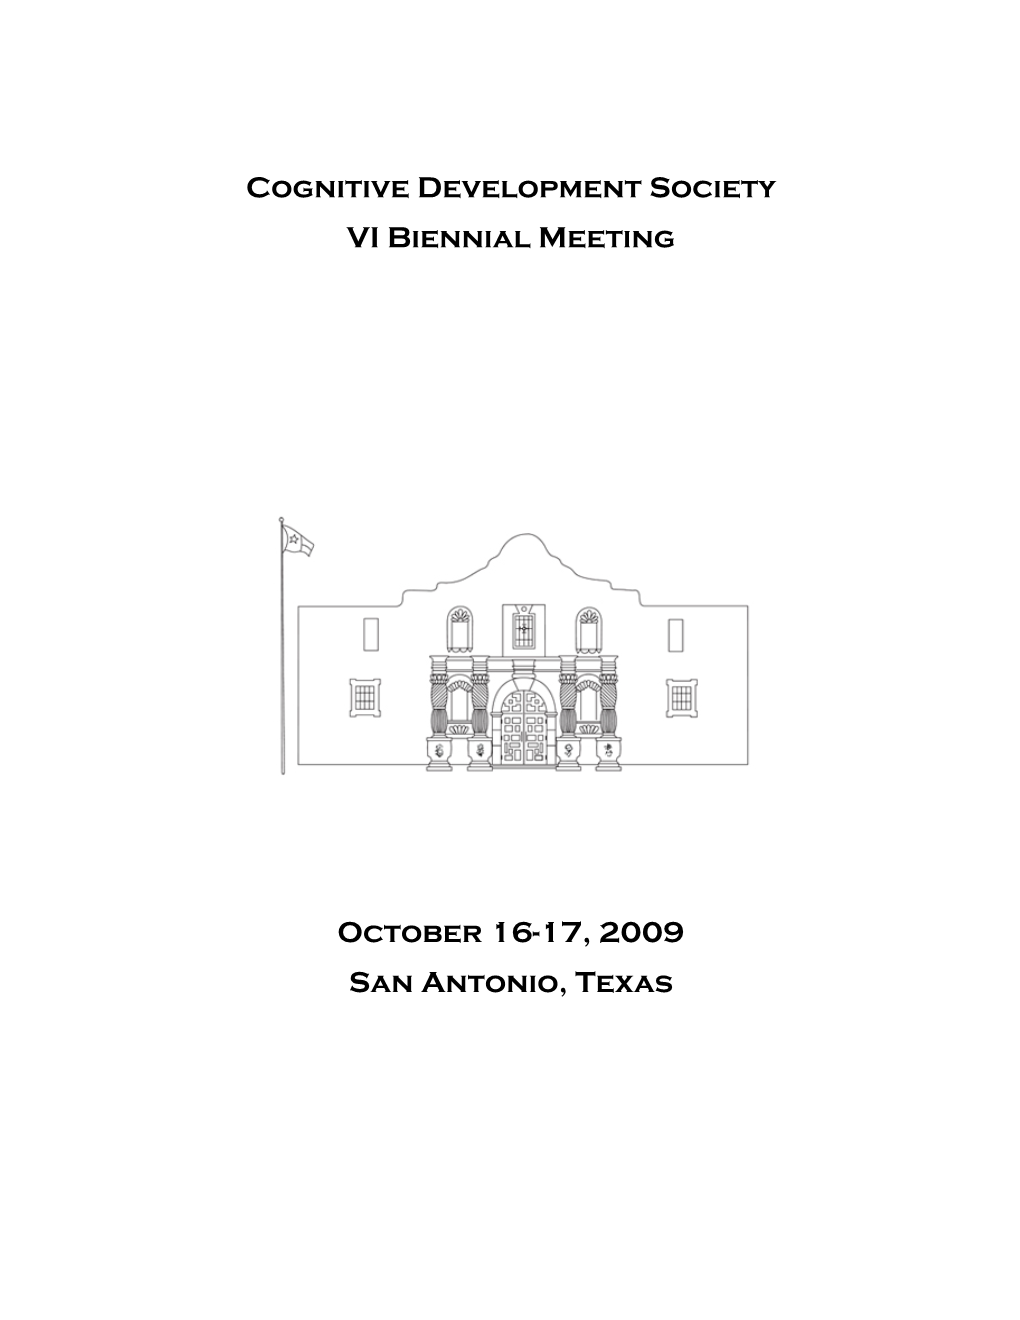 Cognitive Development Society VI Biennial Meeting October 16-17